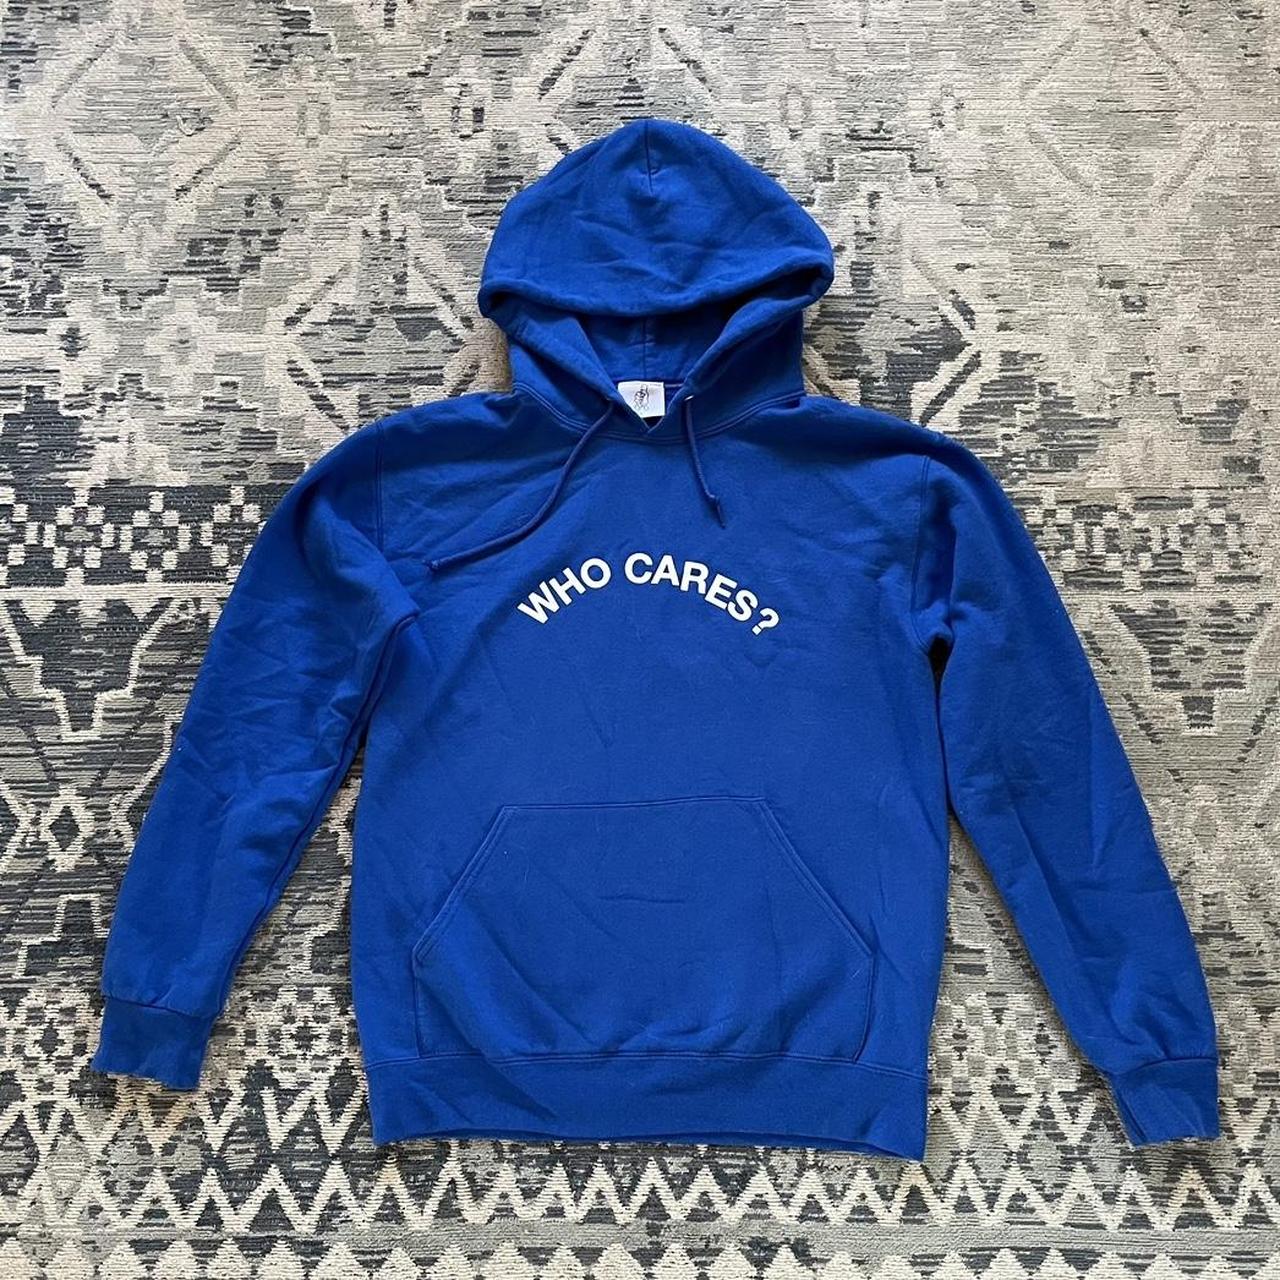 Rex Orange County blue who cares album hoodie - Depop